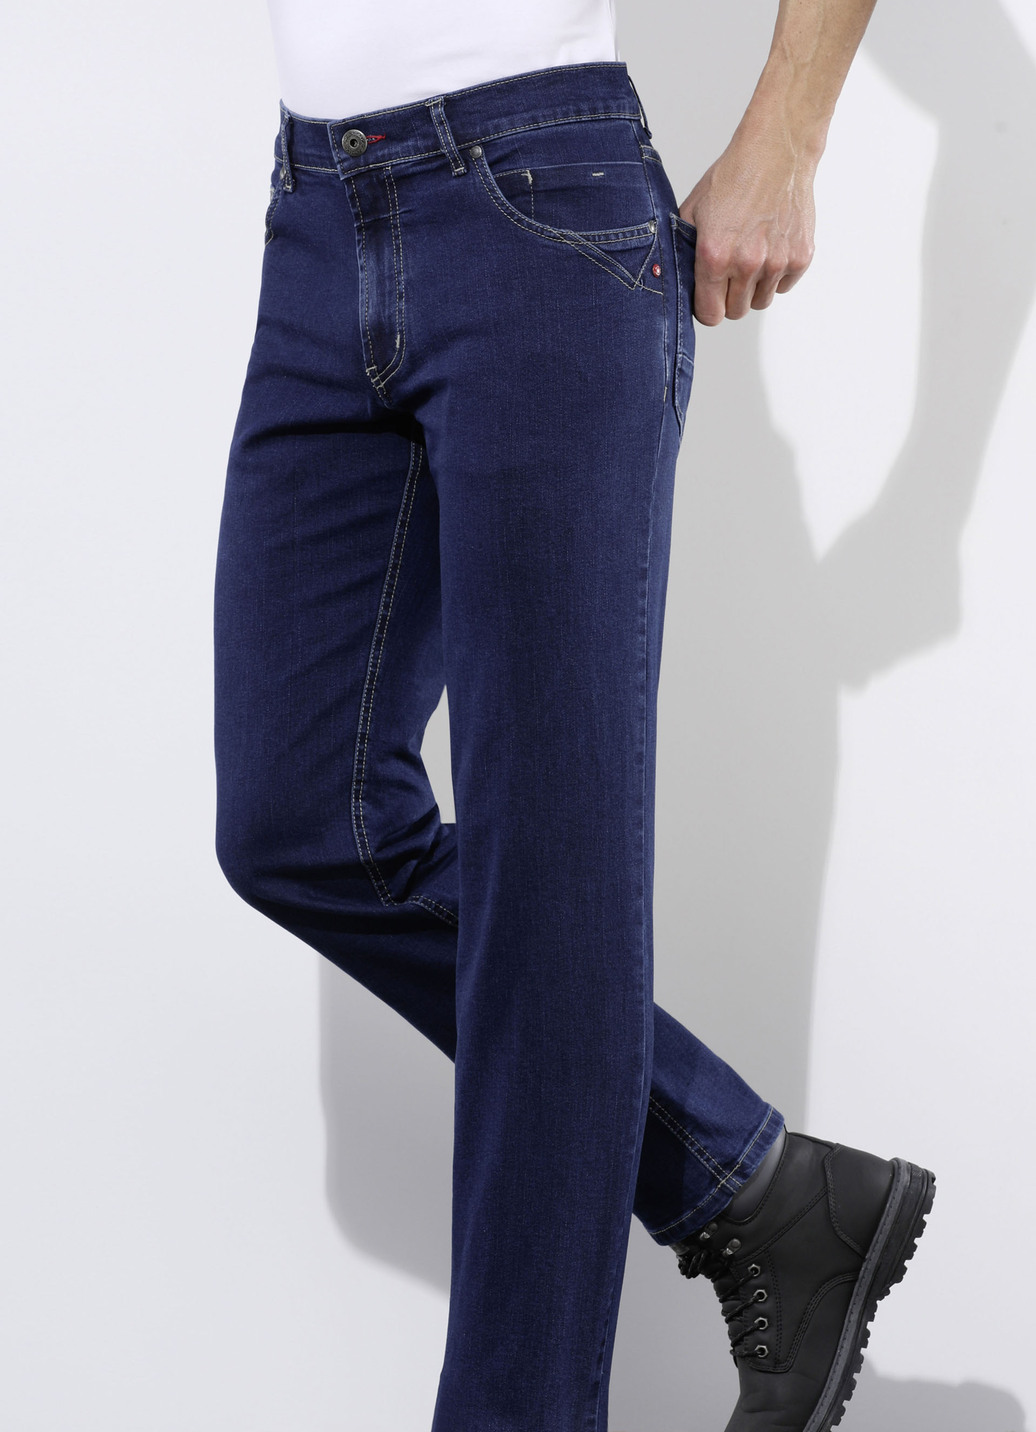 "Francesco Botti"-Jeans in 3 Farben, Dunkelblau, Größe 27 von FRANCESCO BOTTI